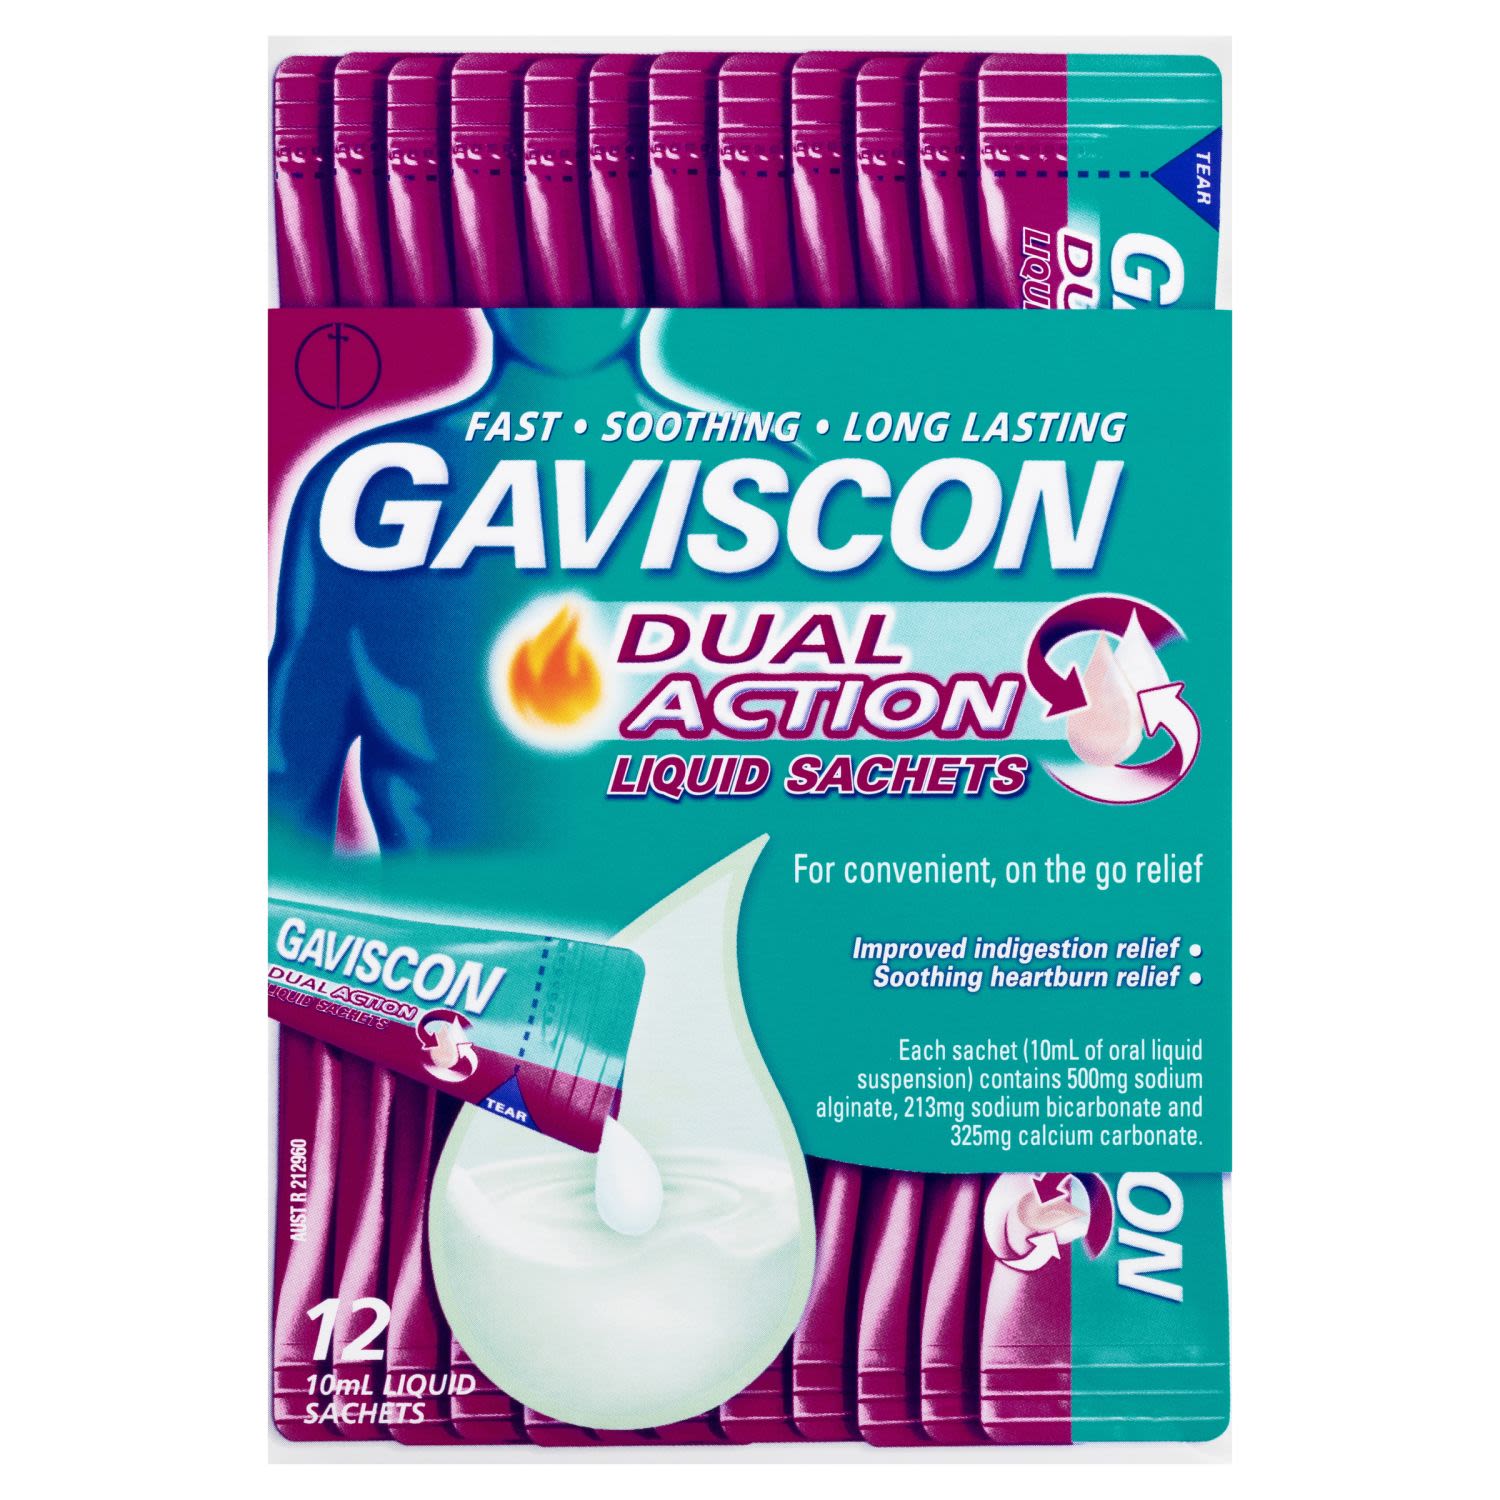 Gaviscon Dual Action Liquid Sachets for Heartburn & Indigestion Relief, 12 Each